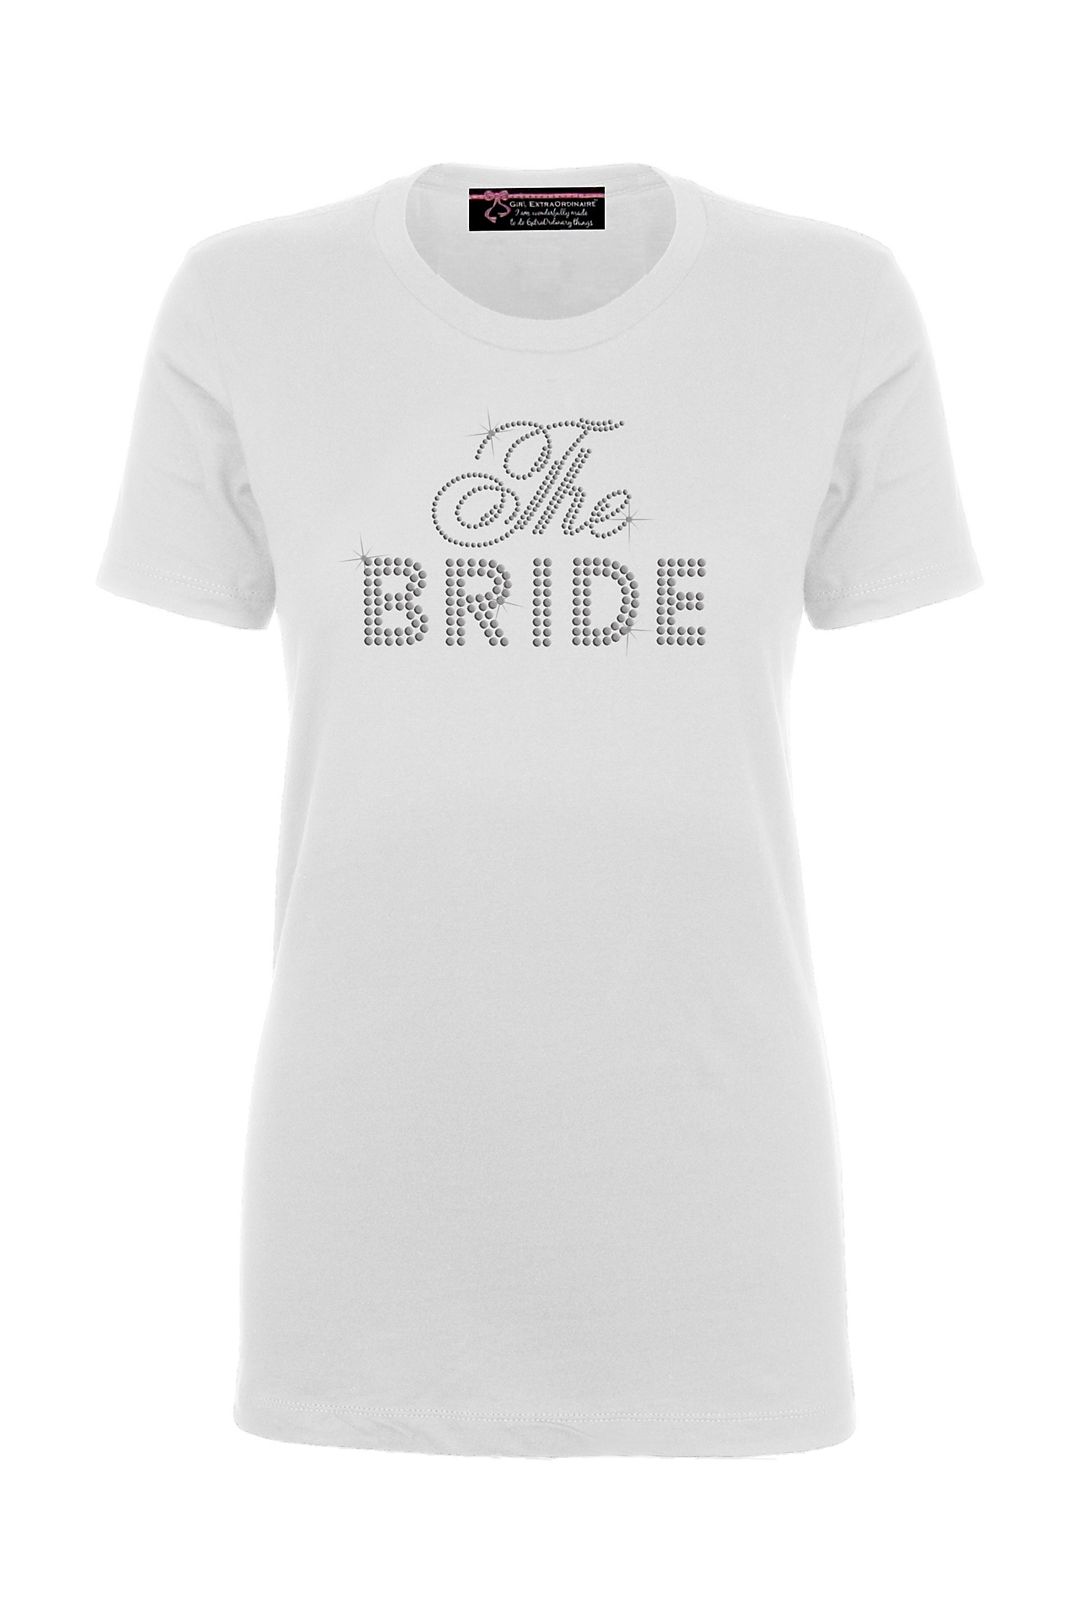 The Bride Big Bling T-Shirt Image 1